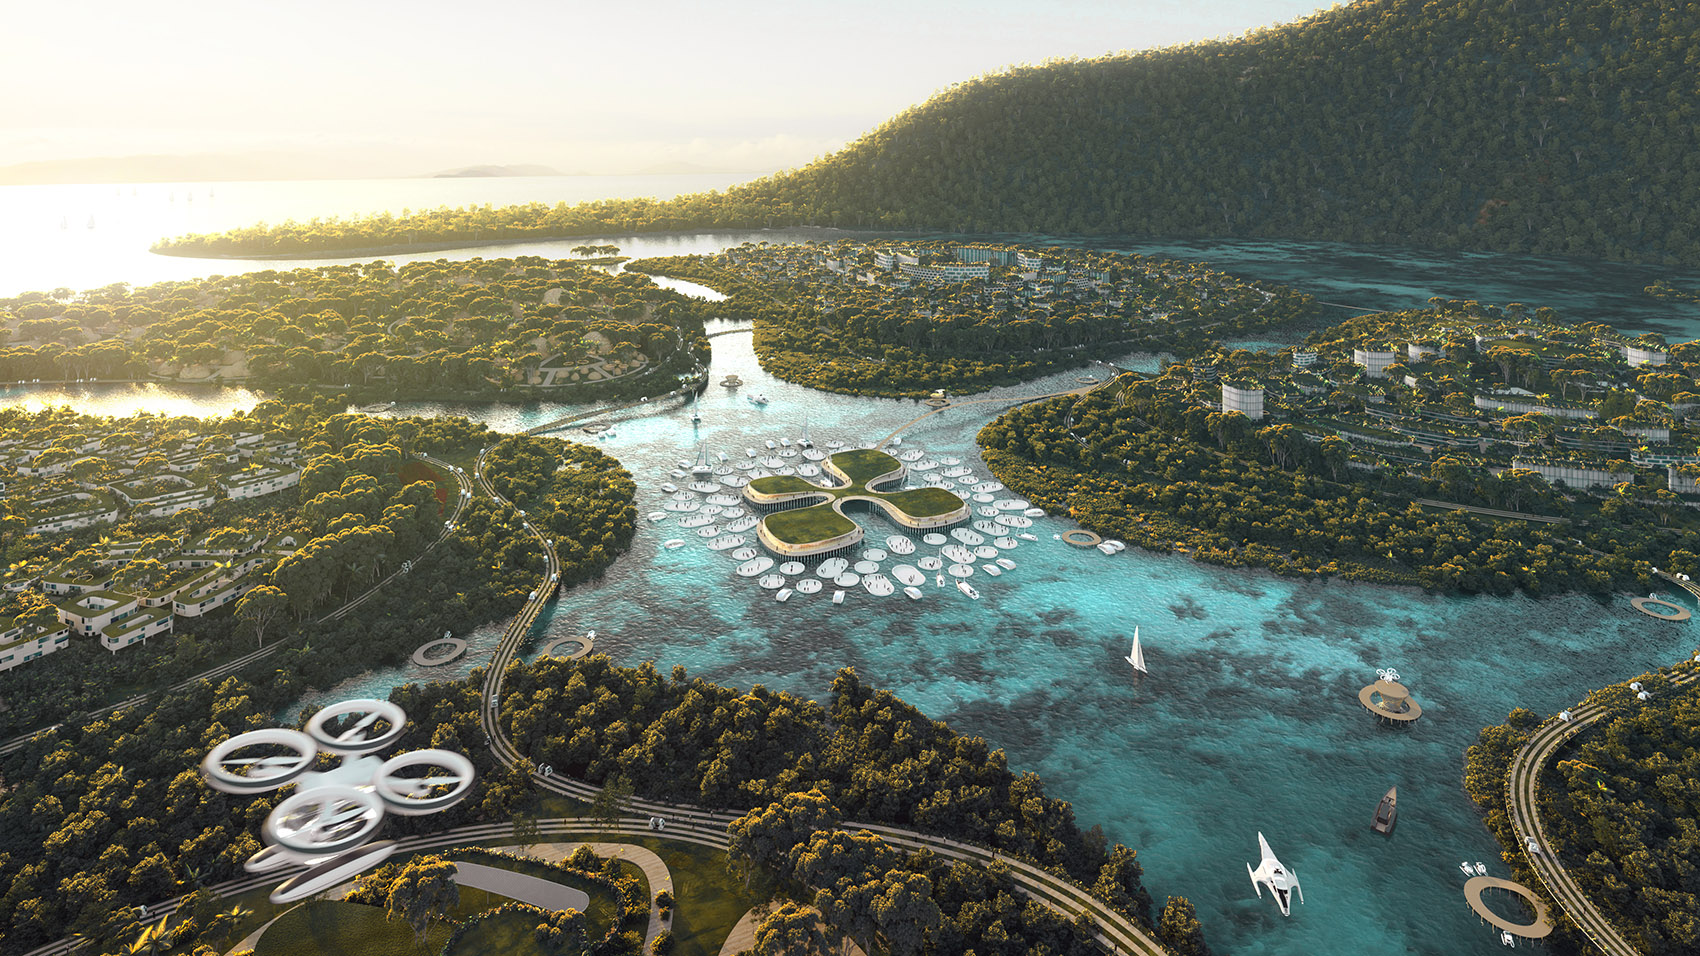 BIG携手Hijjas和Ramboll为马来西亚槟城南岛打造生物多样城市/“Biodivercity”规划方案为槟城南岛的可持续未来铺平道路-71